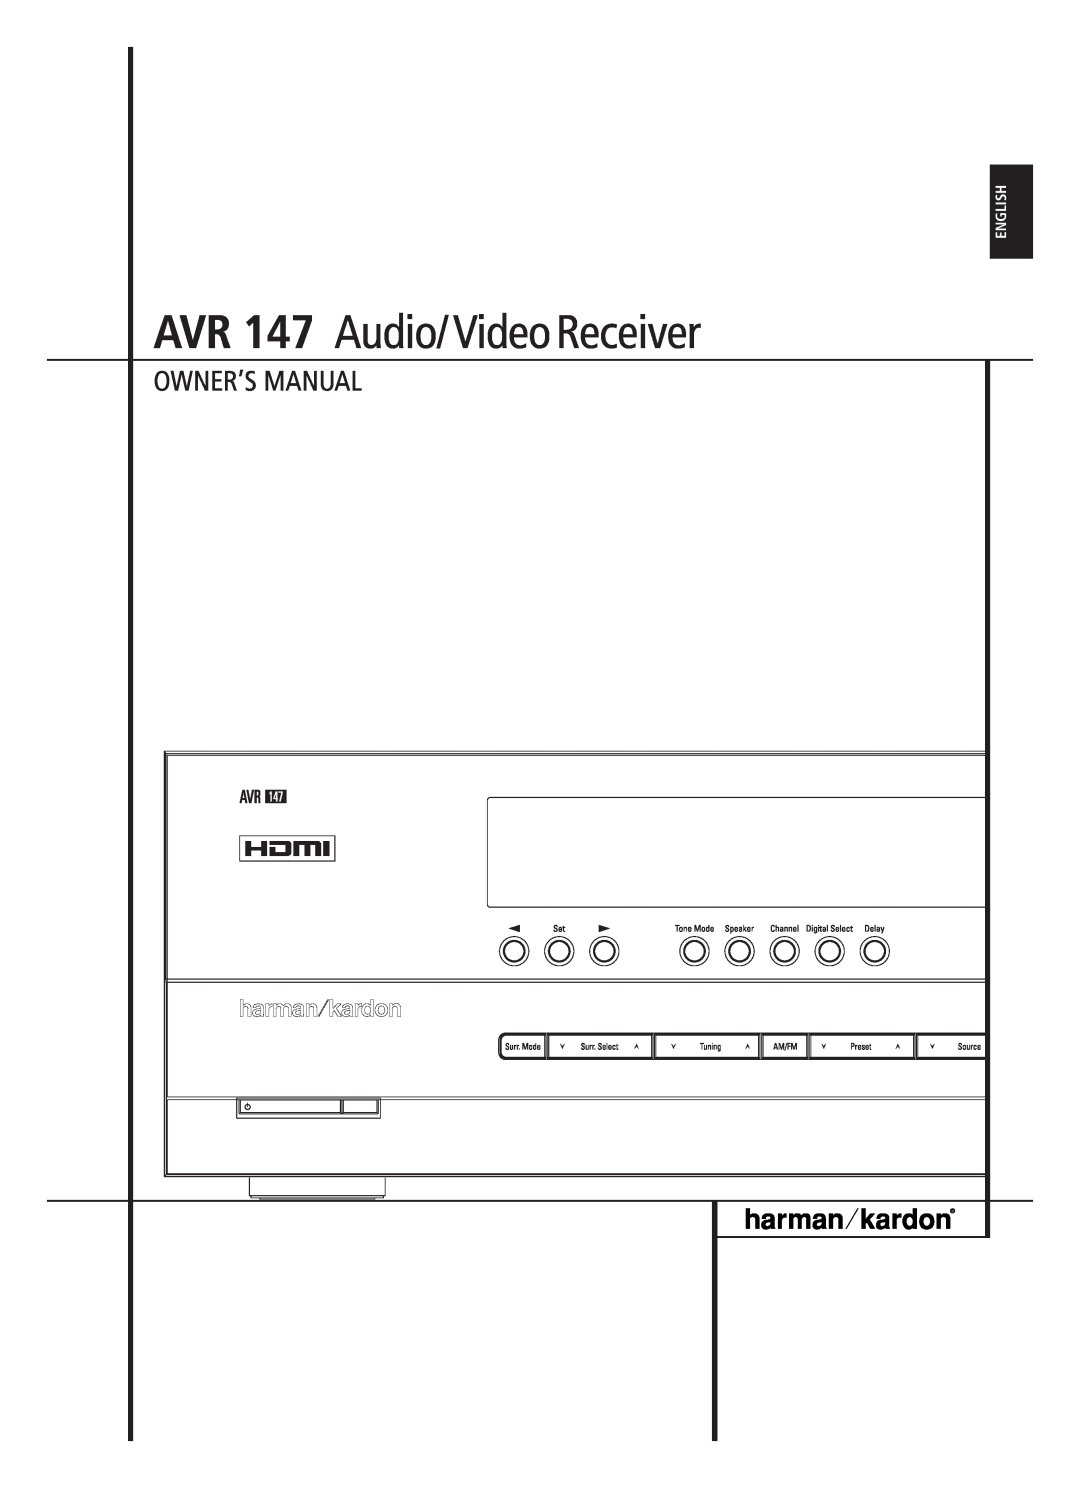 Harman-Kardon owner manual AVR 147 Audio/ Video Receiver, English 